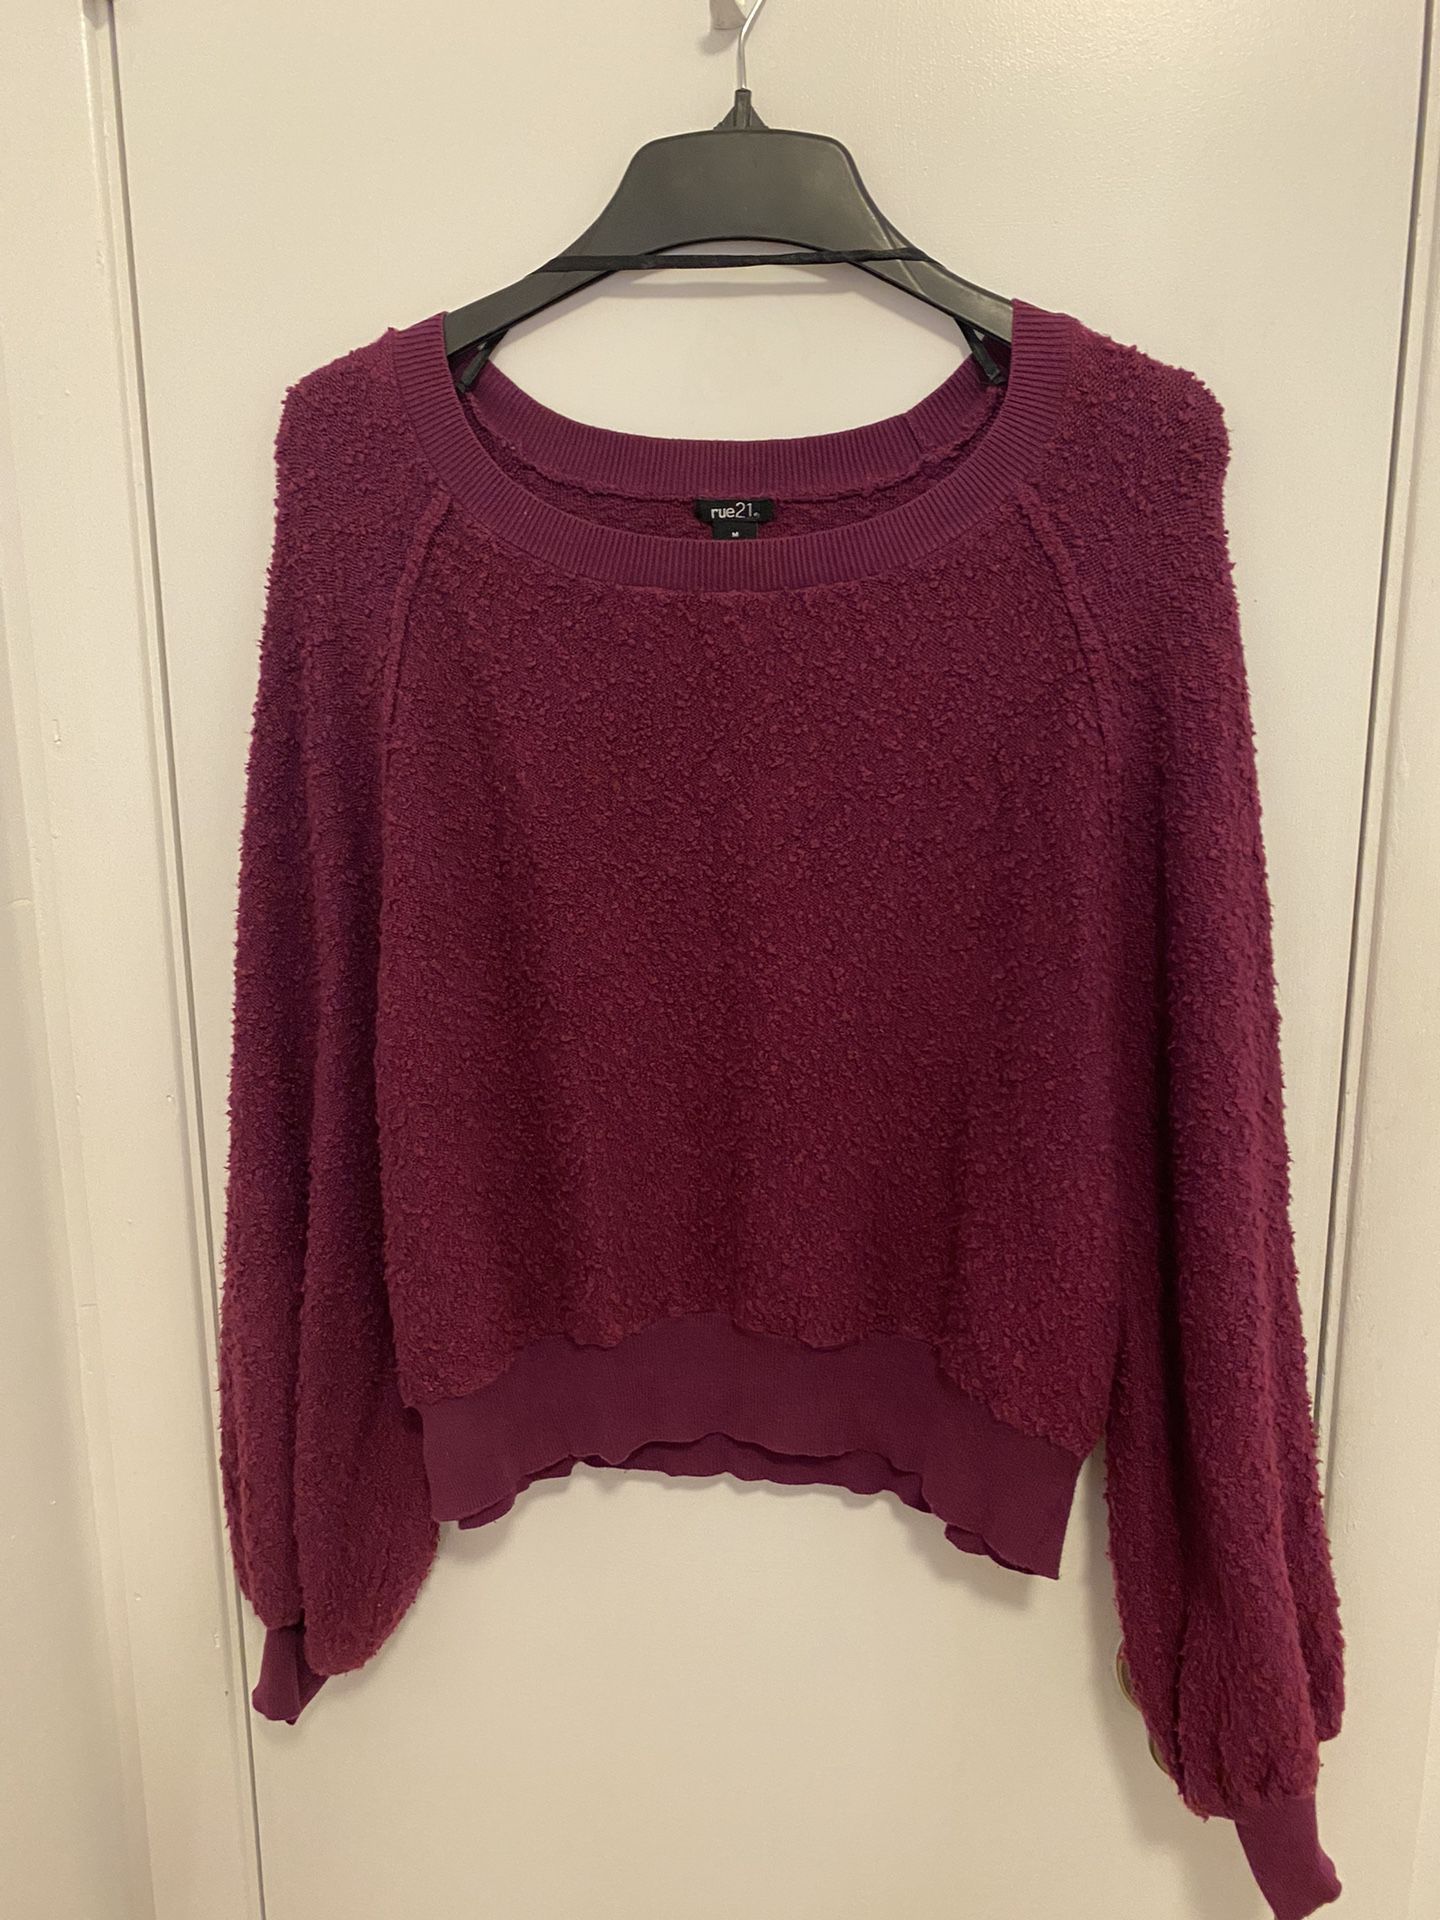 Burgundy Rue21 Sweater